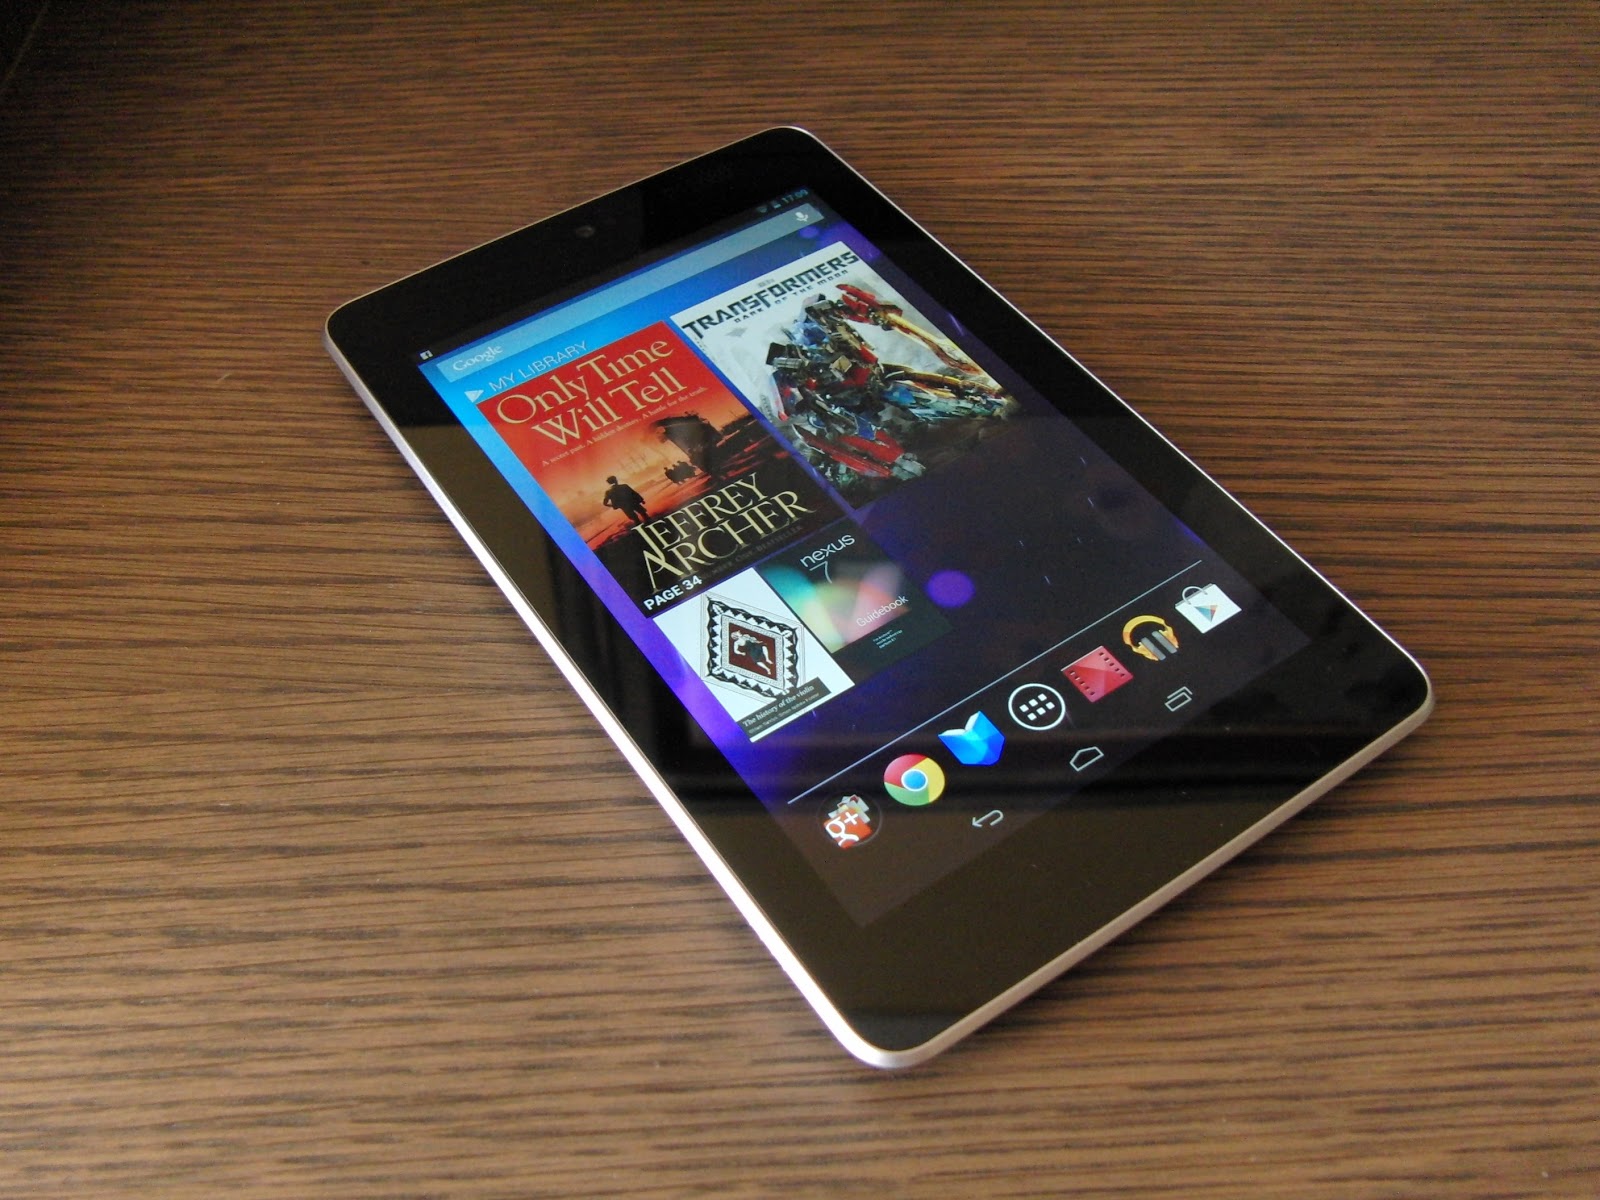 Google Nexus 7 32gb 3g Price